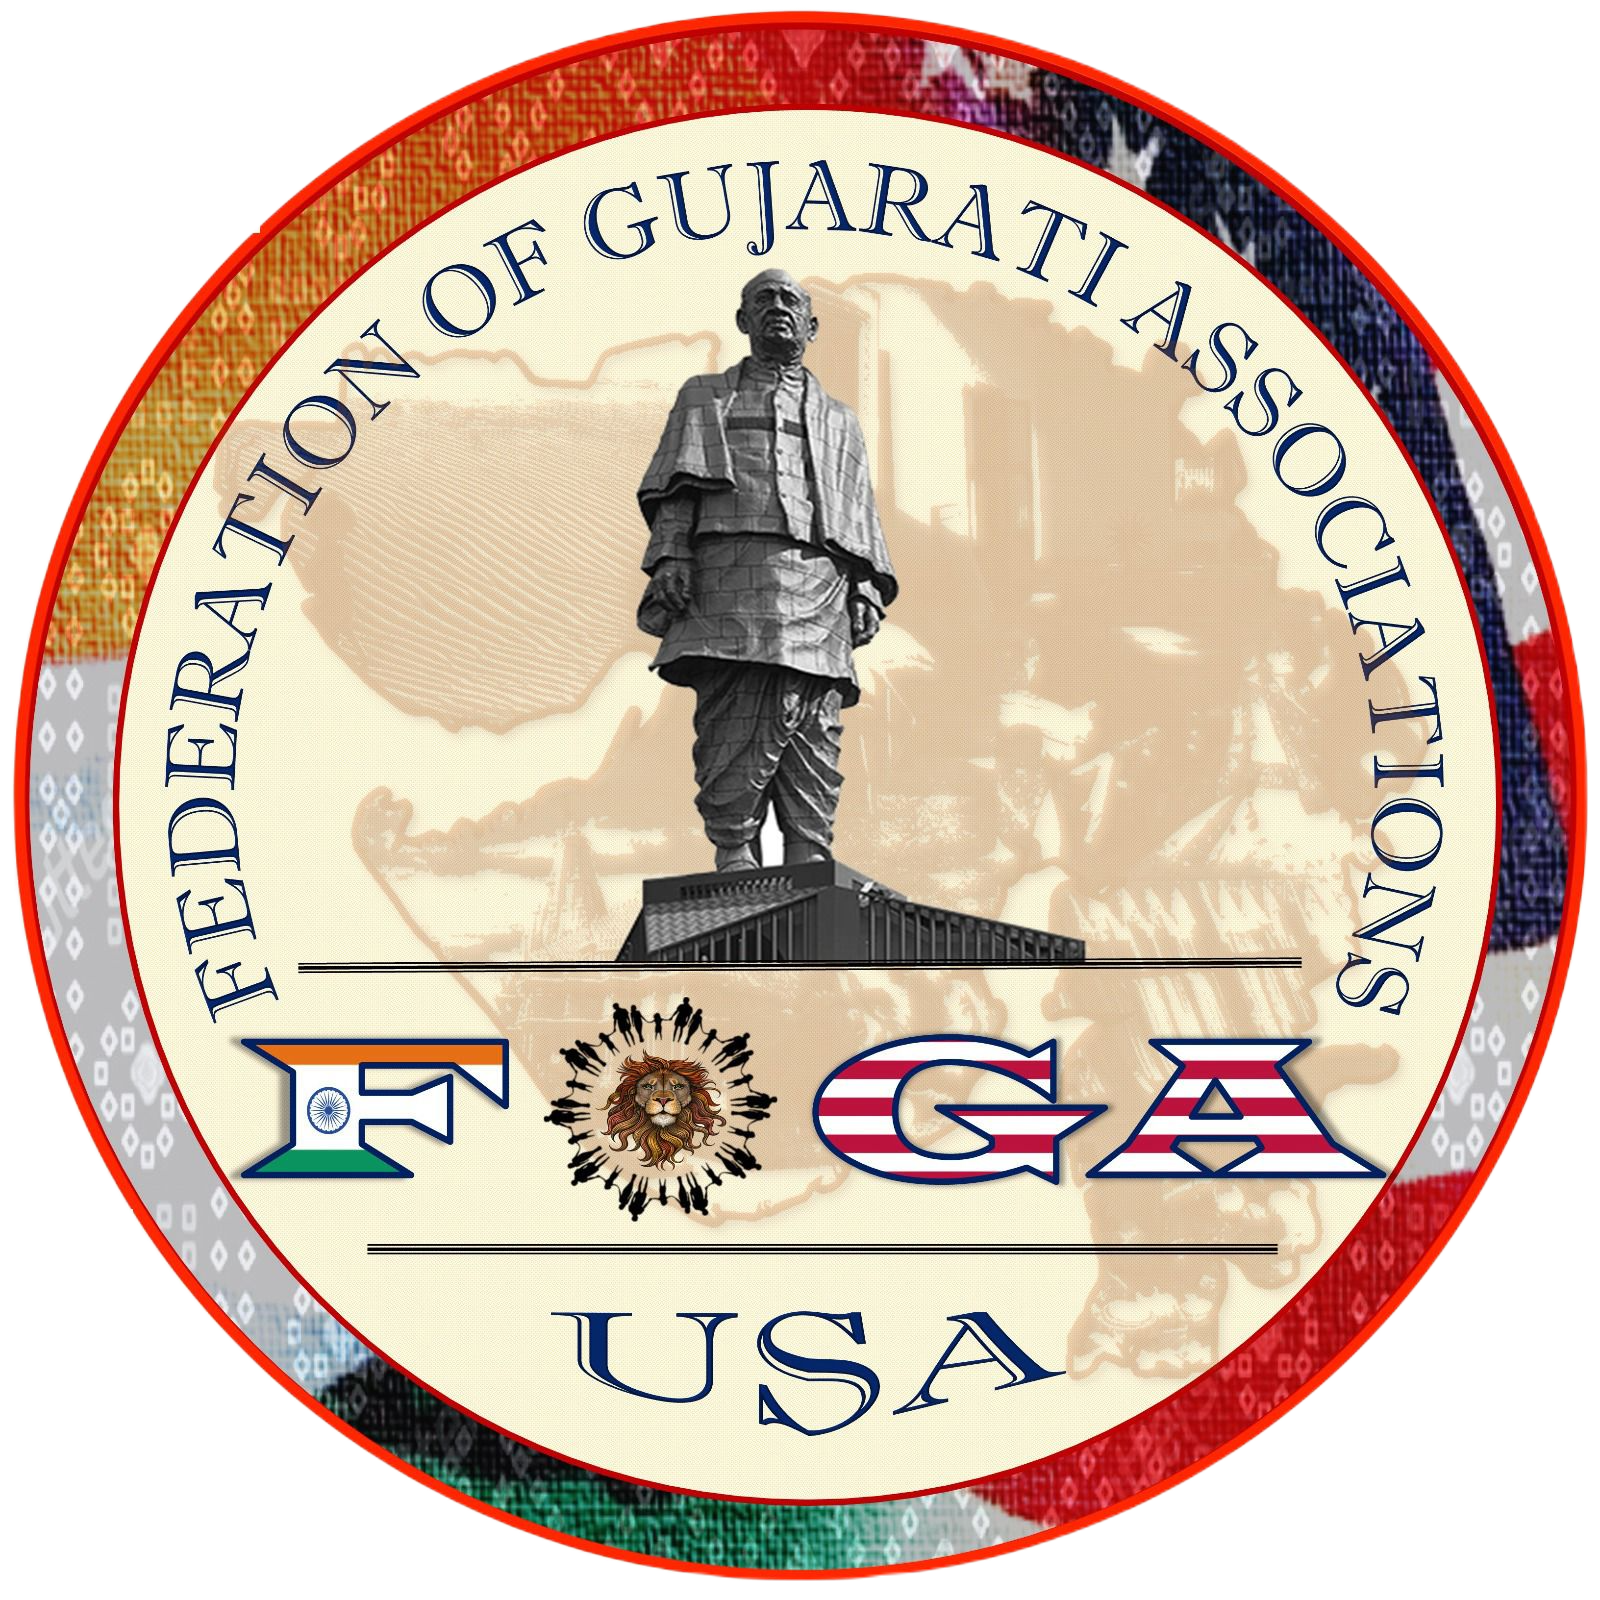 Federation of Gujarati Associations of USA